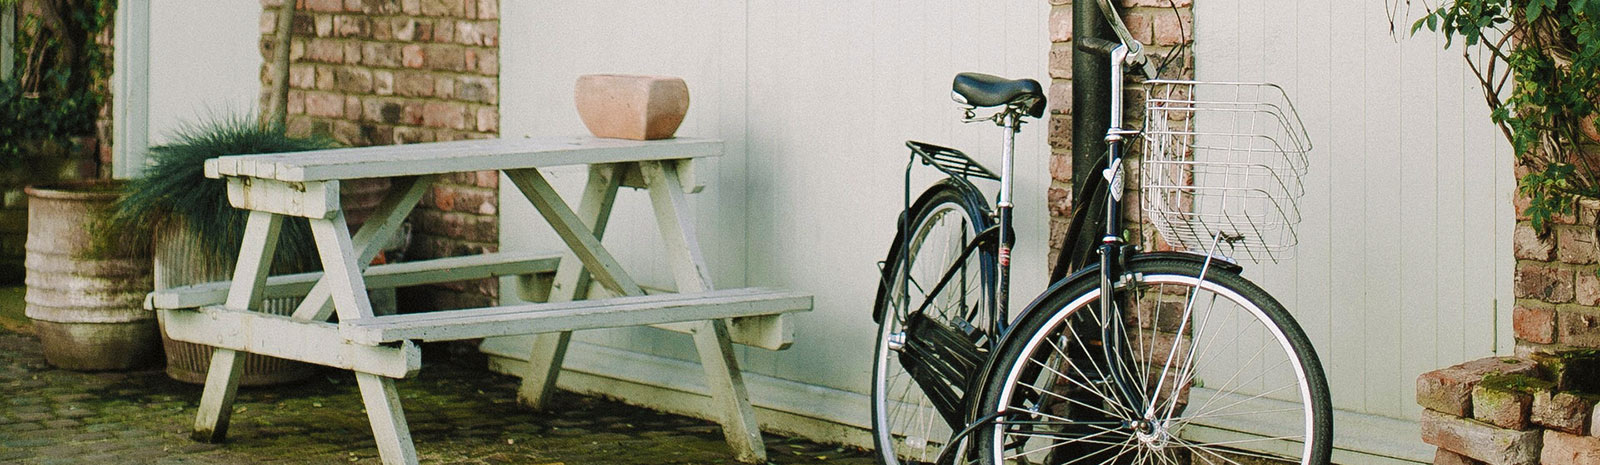 Bike and picnic table.